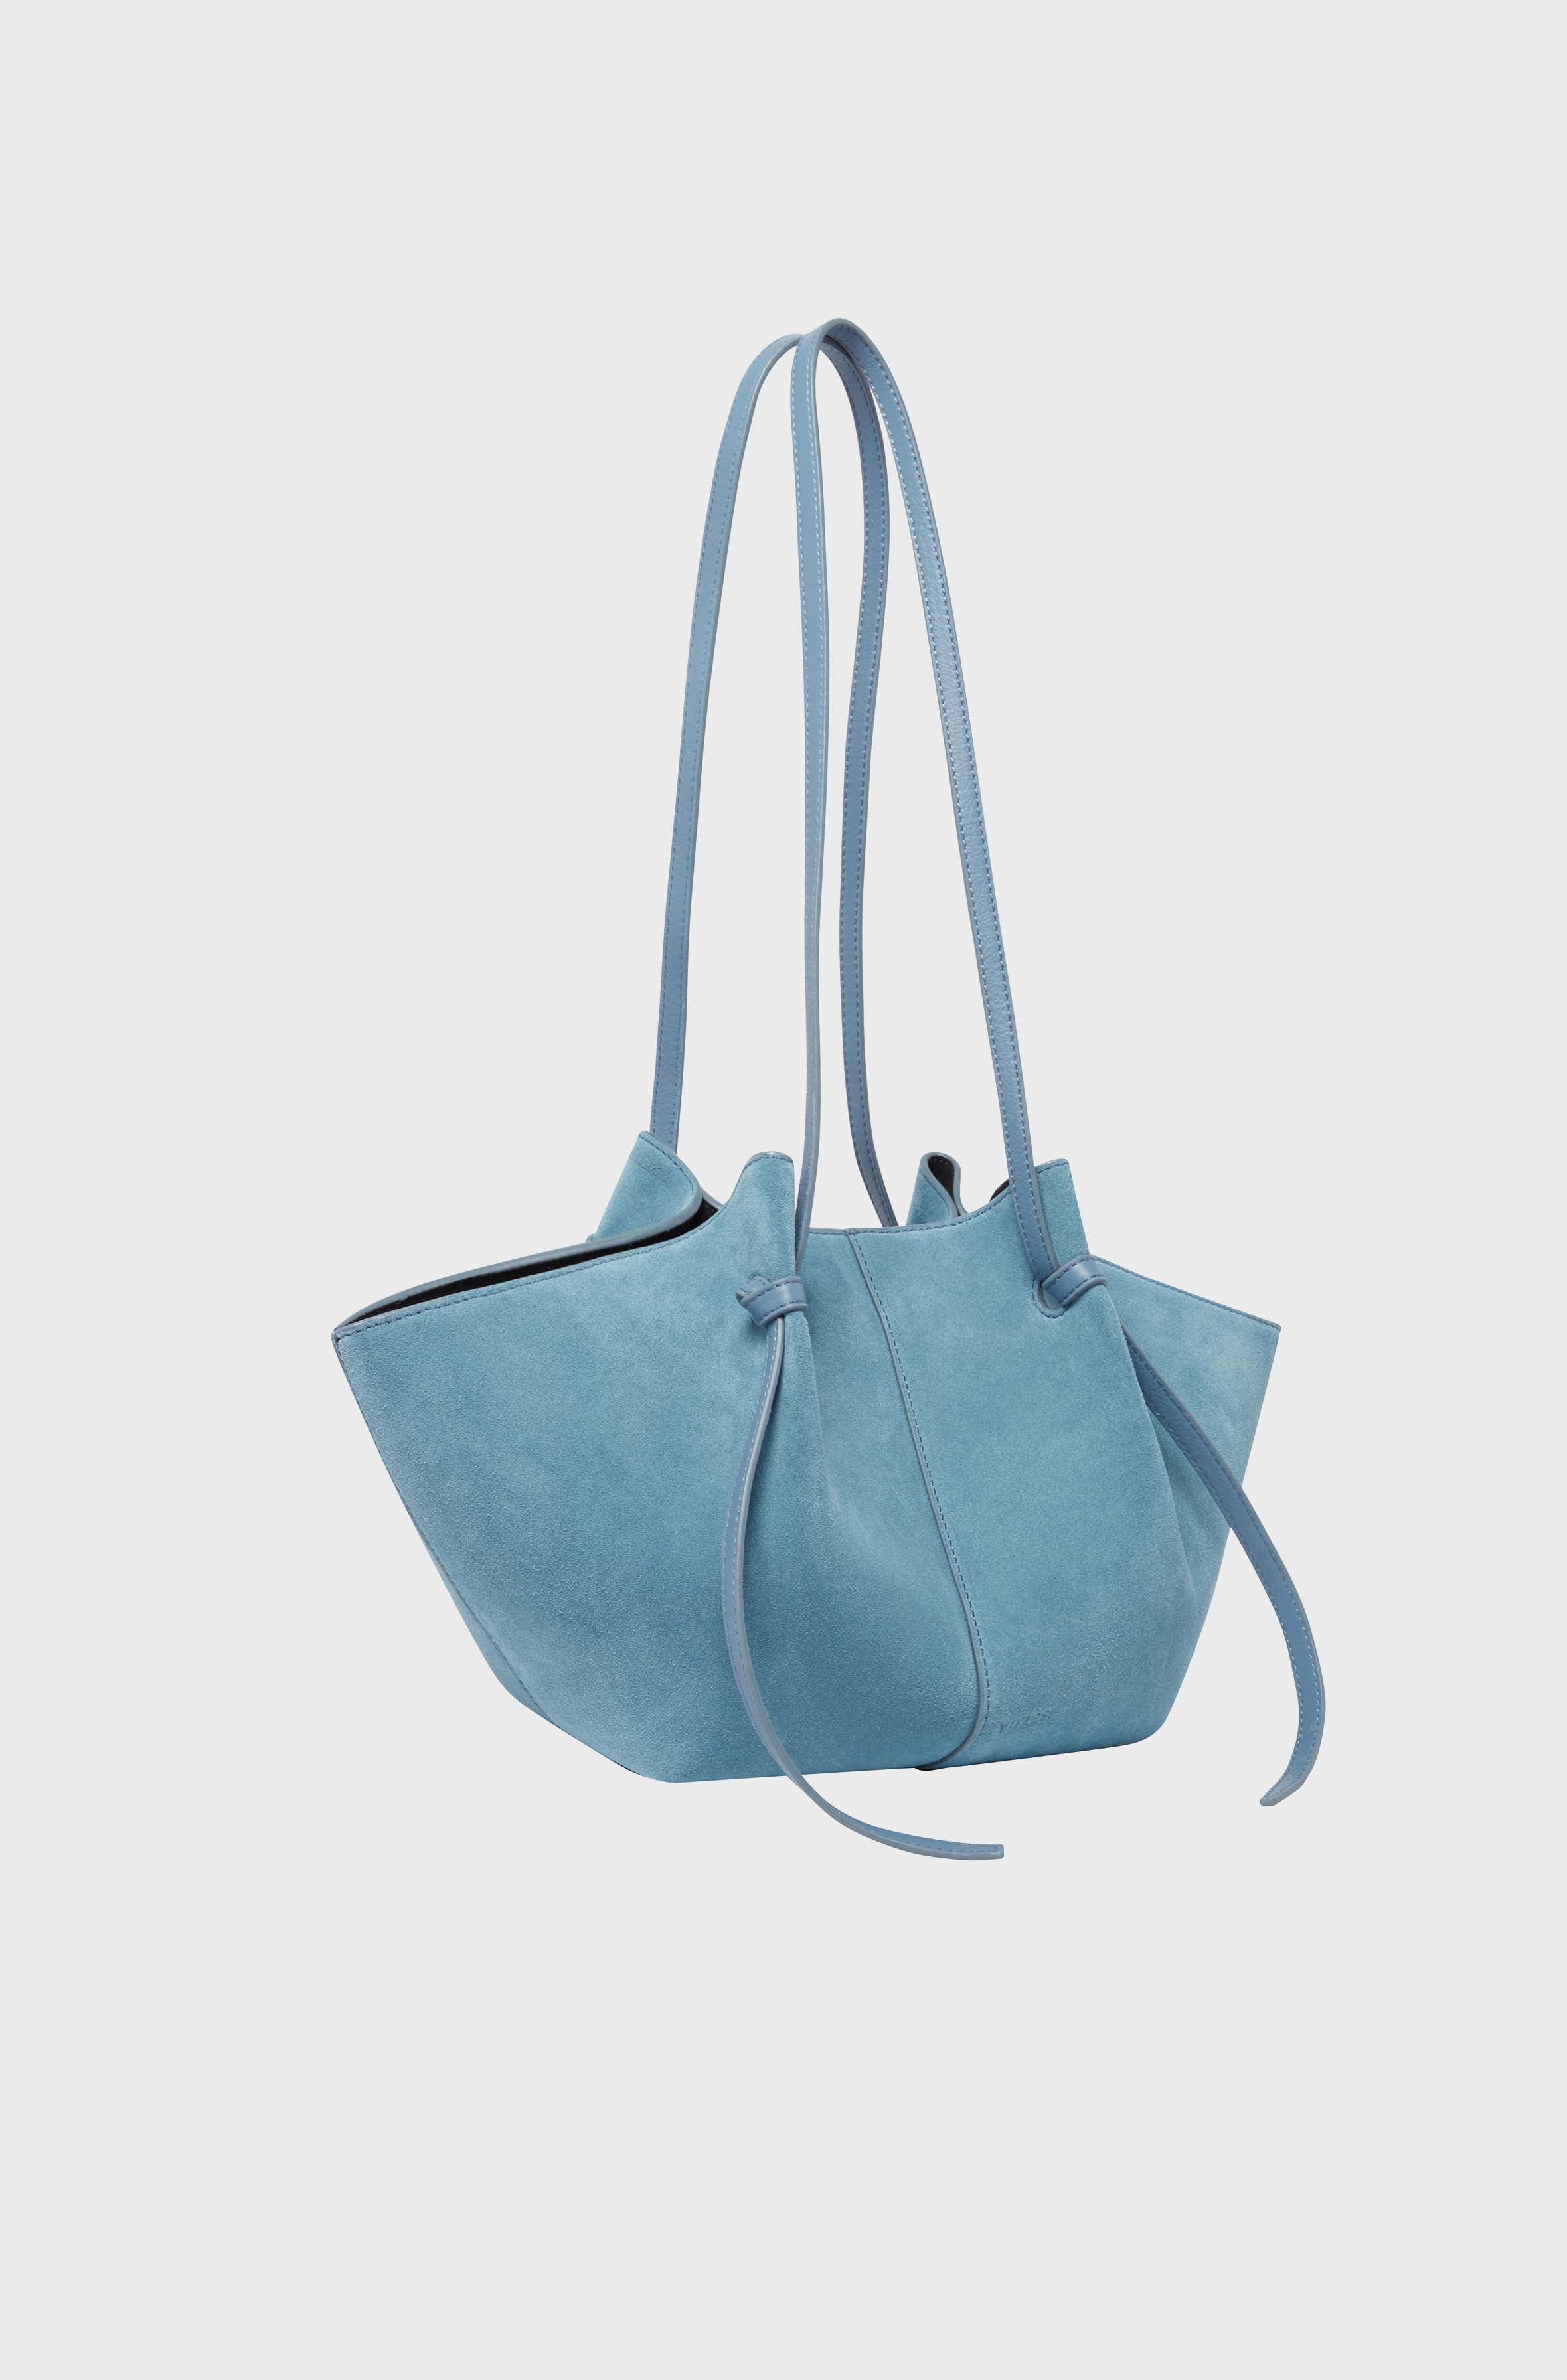 UhfmrShops, Yuzefi woven leather tote bag Blue